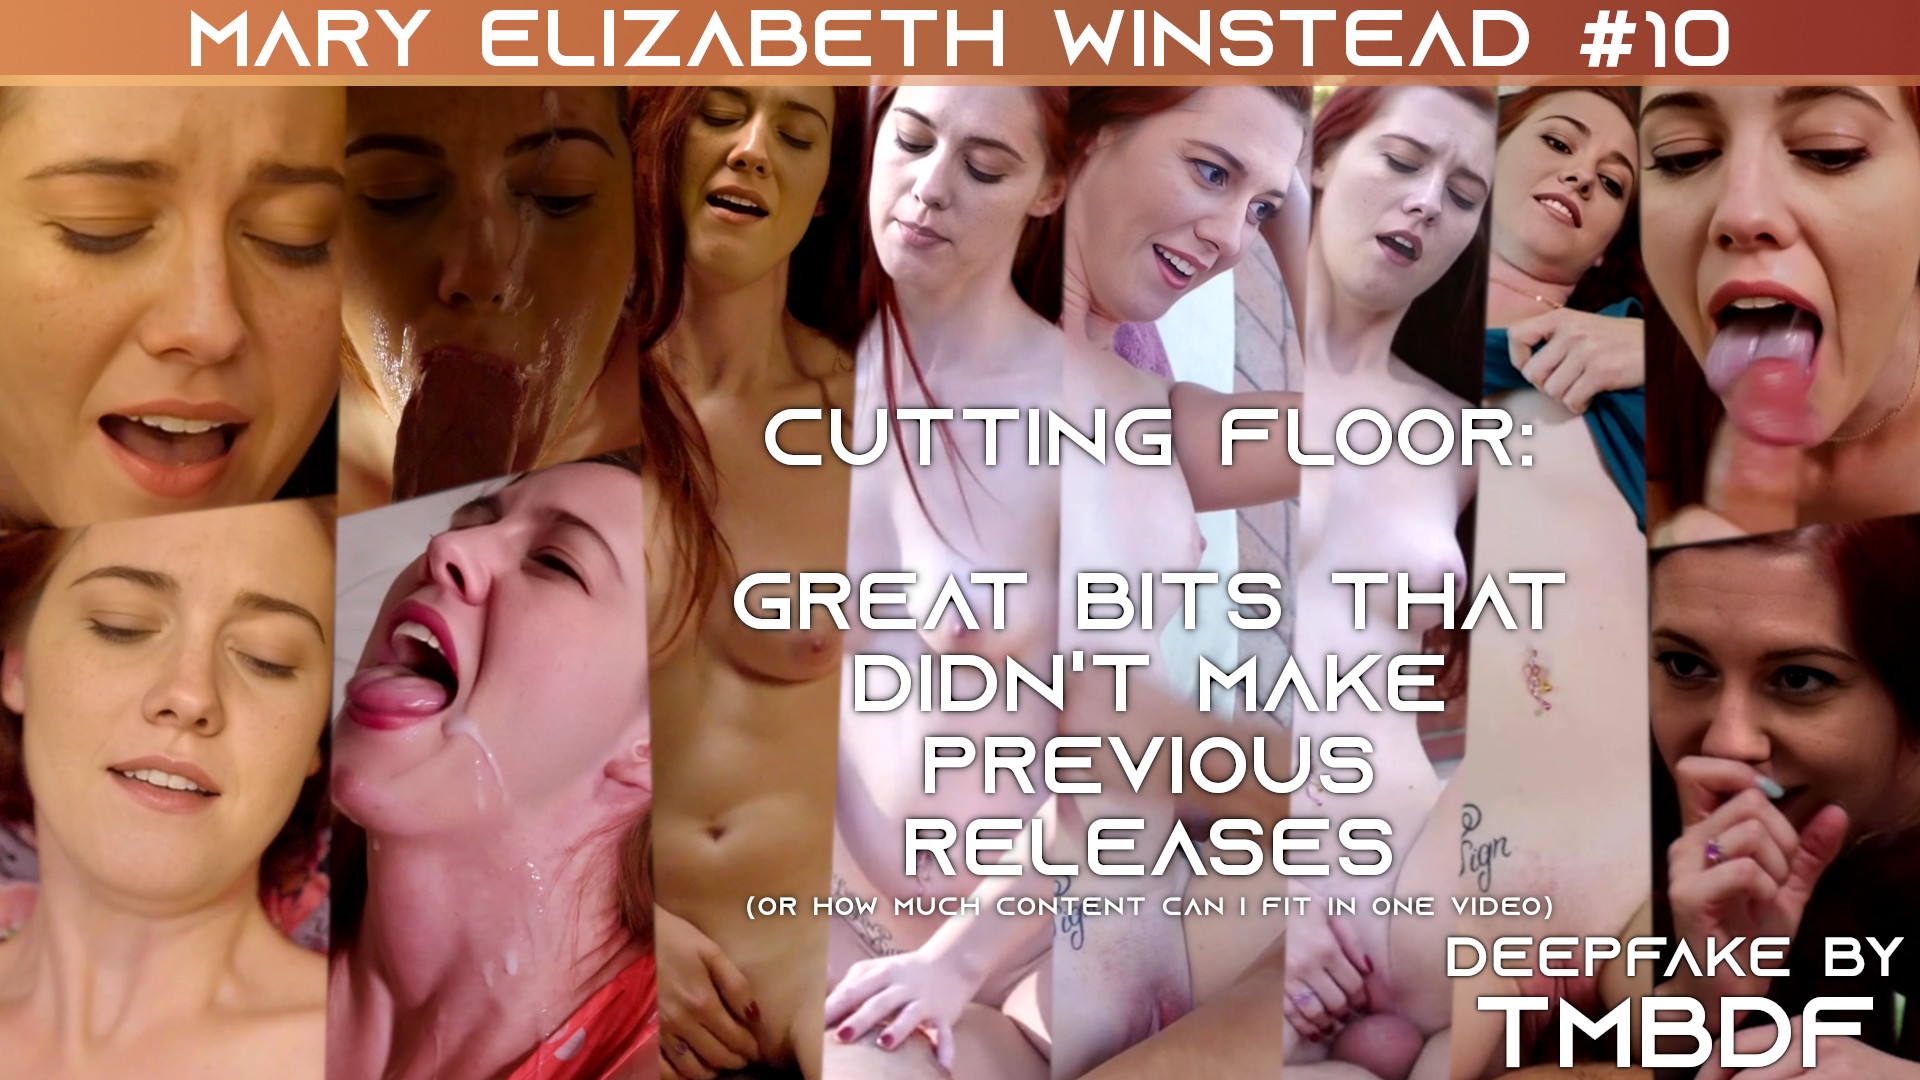 Mary Elizabeth Winstead #10 - PREVIEW - Full version in video description